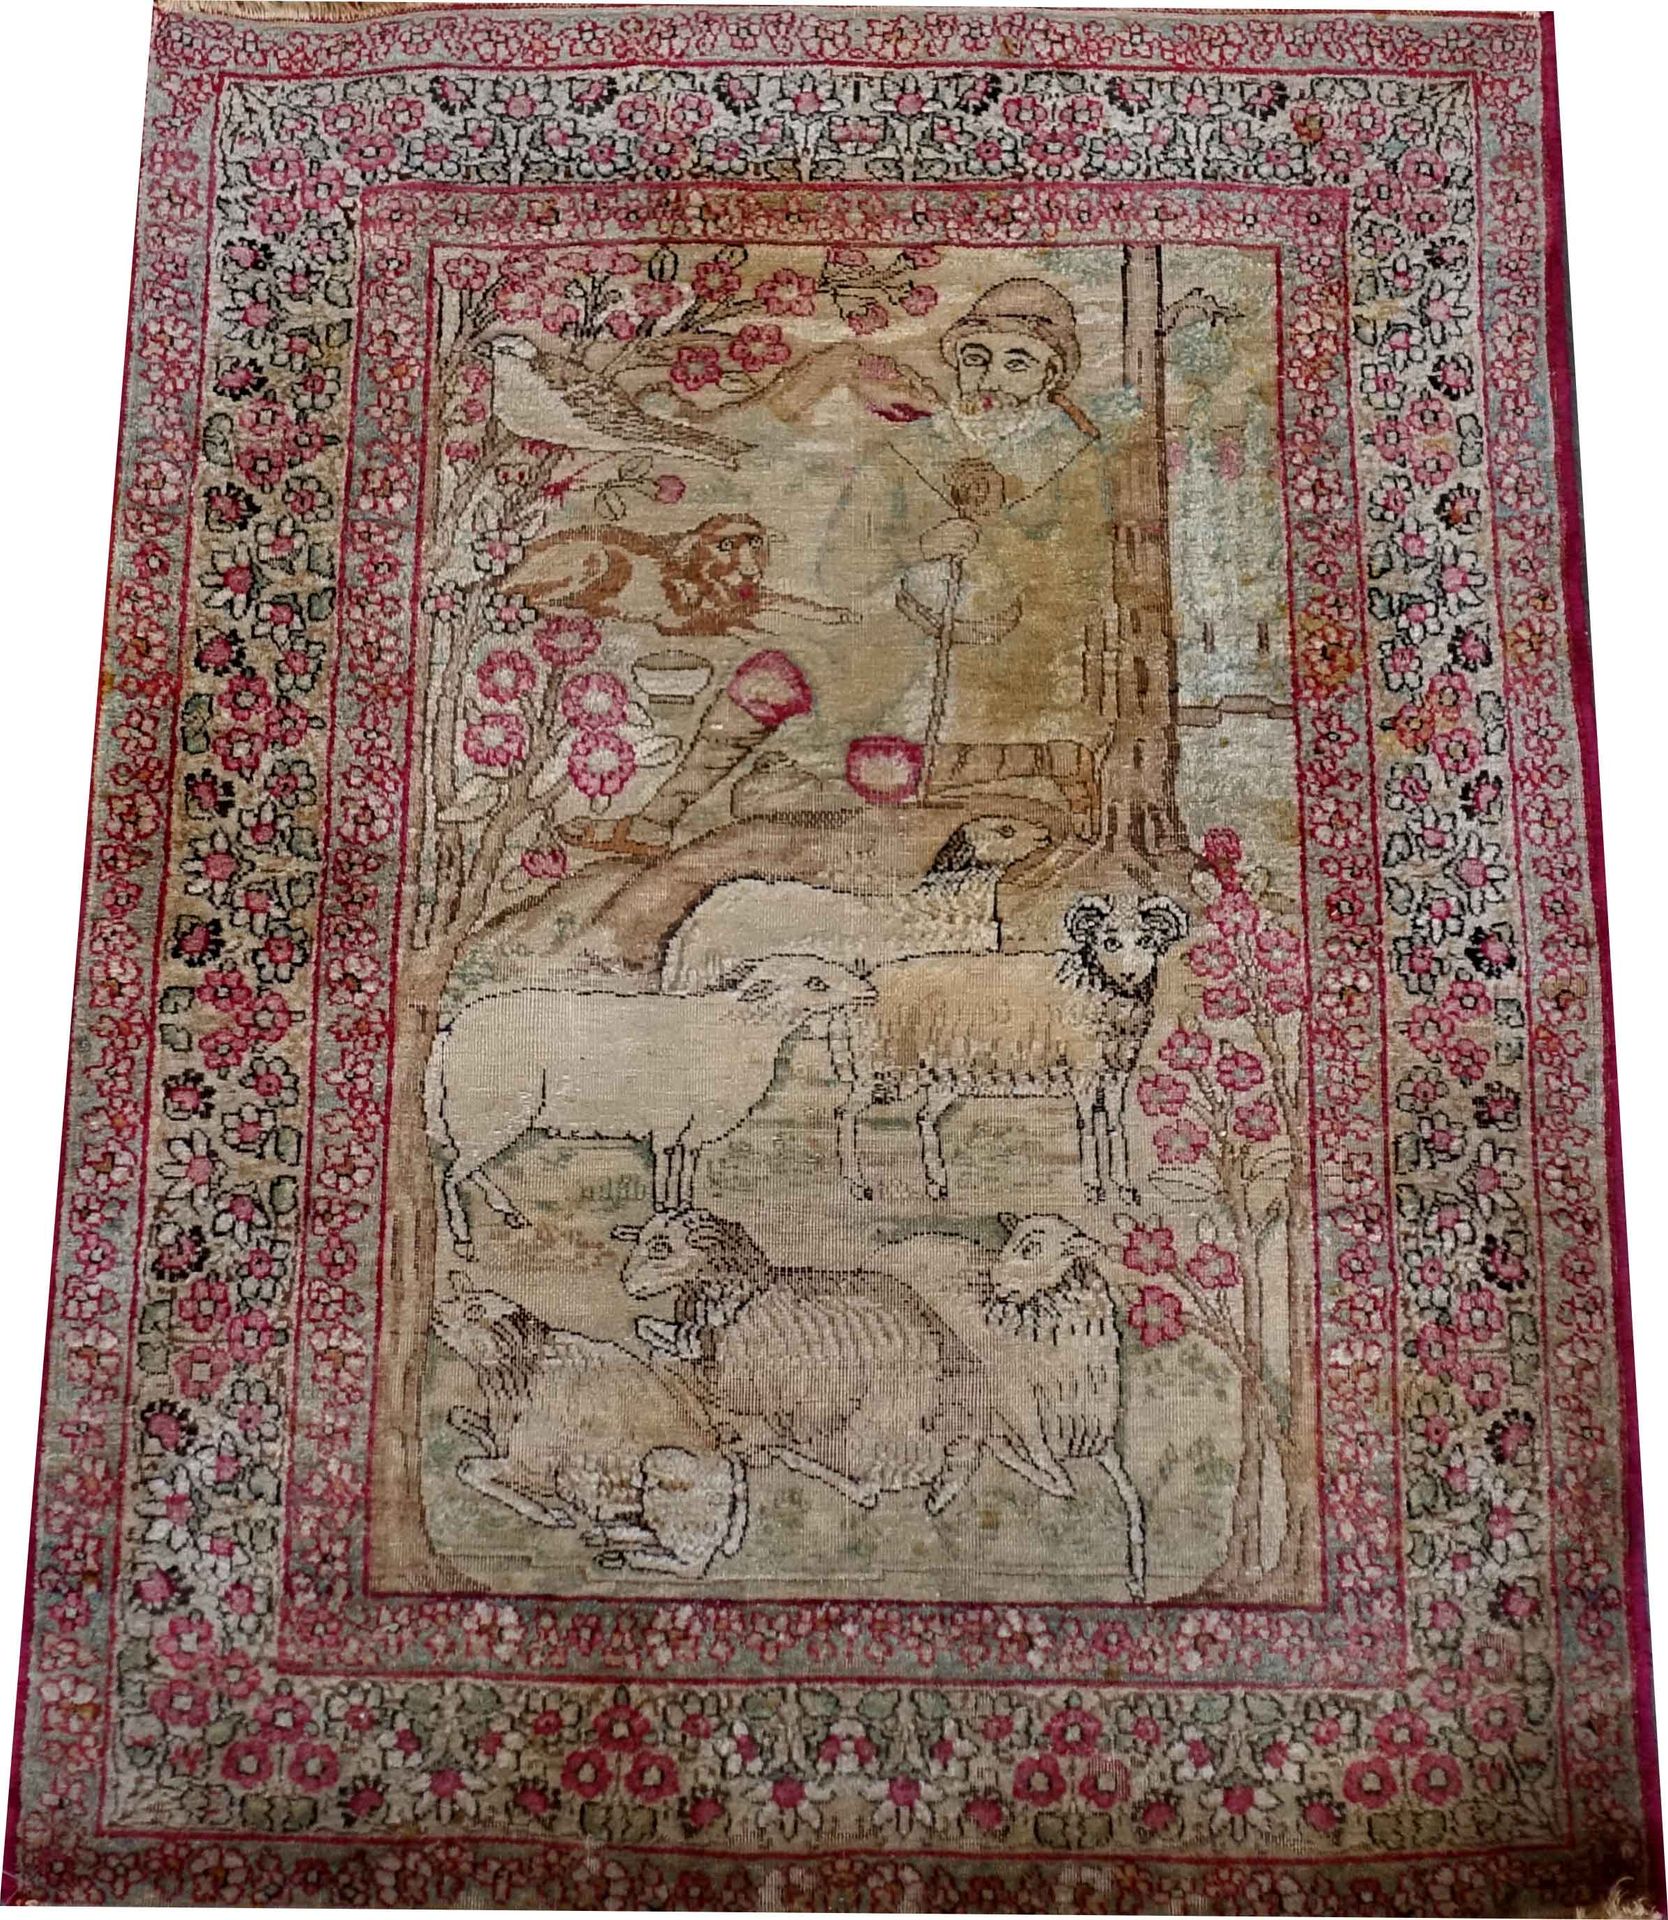 Carpette figurative Kirman. 它展示了一个牧羊人与他的狗和他的羊群。花卉边框有三条带子。尺寸：84 x 60厘米。